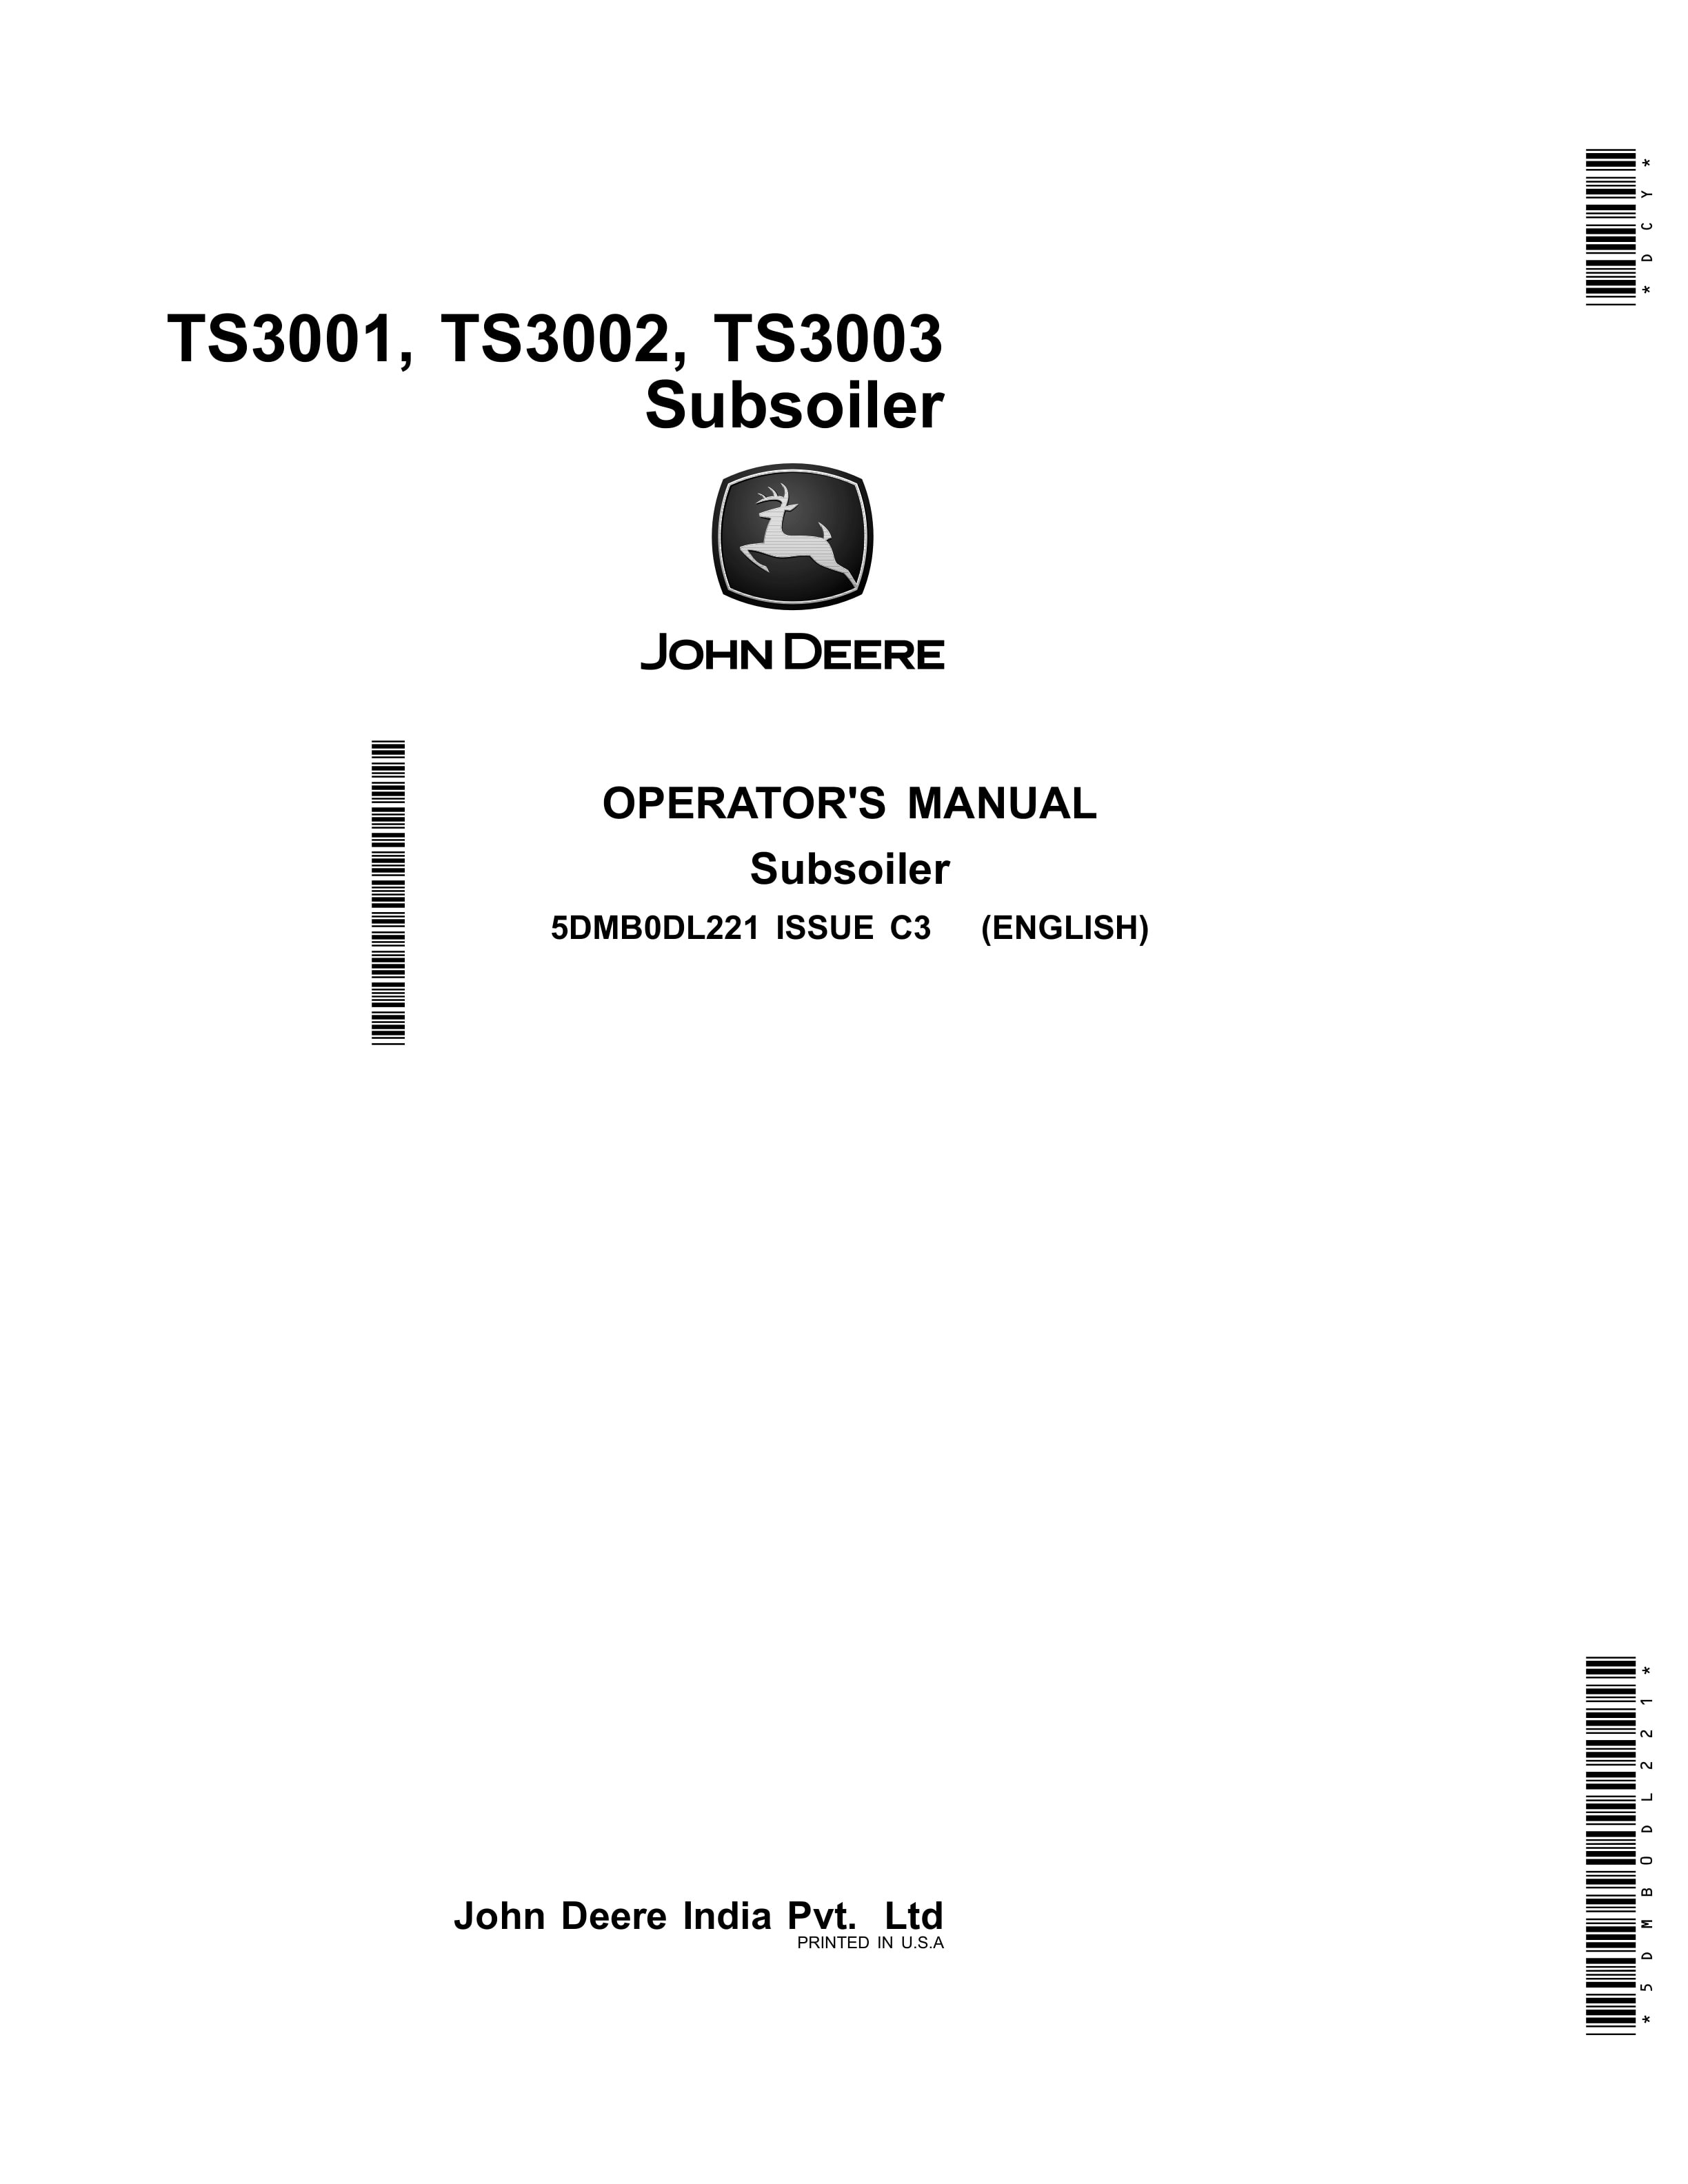 John Deere TS3001 TS3002 TS3003 Subsoiler Operator Manual 5DMB0DL221 1